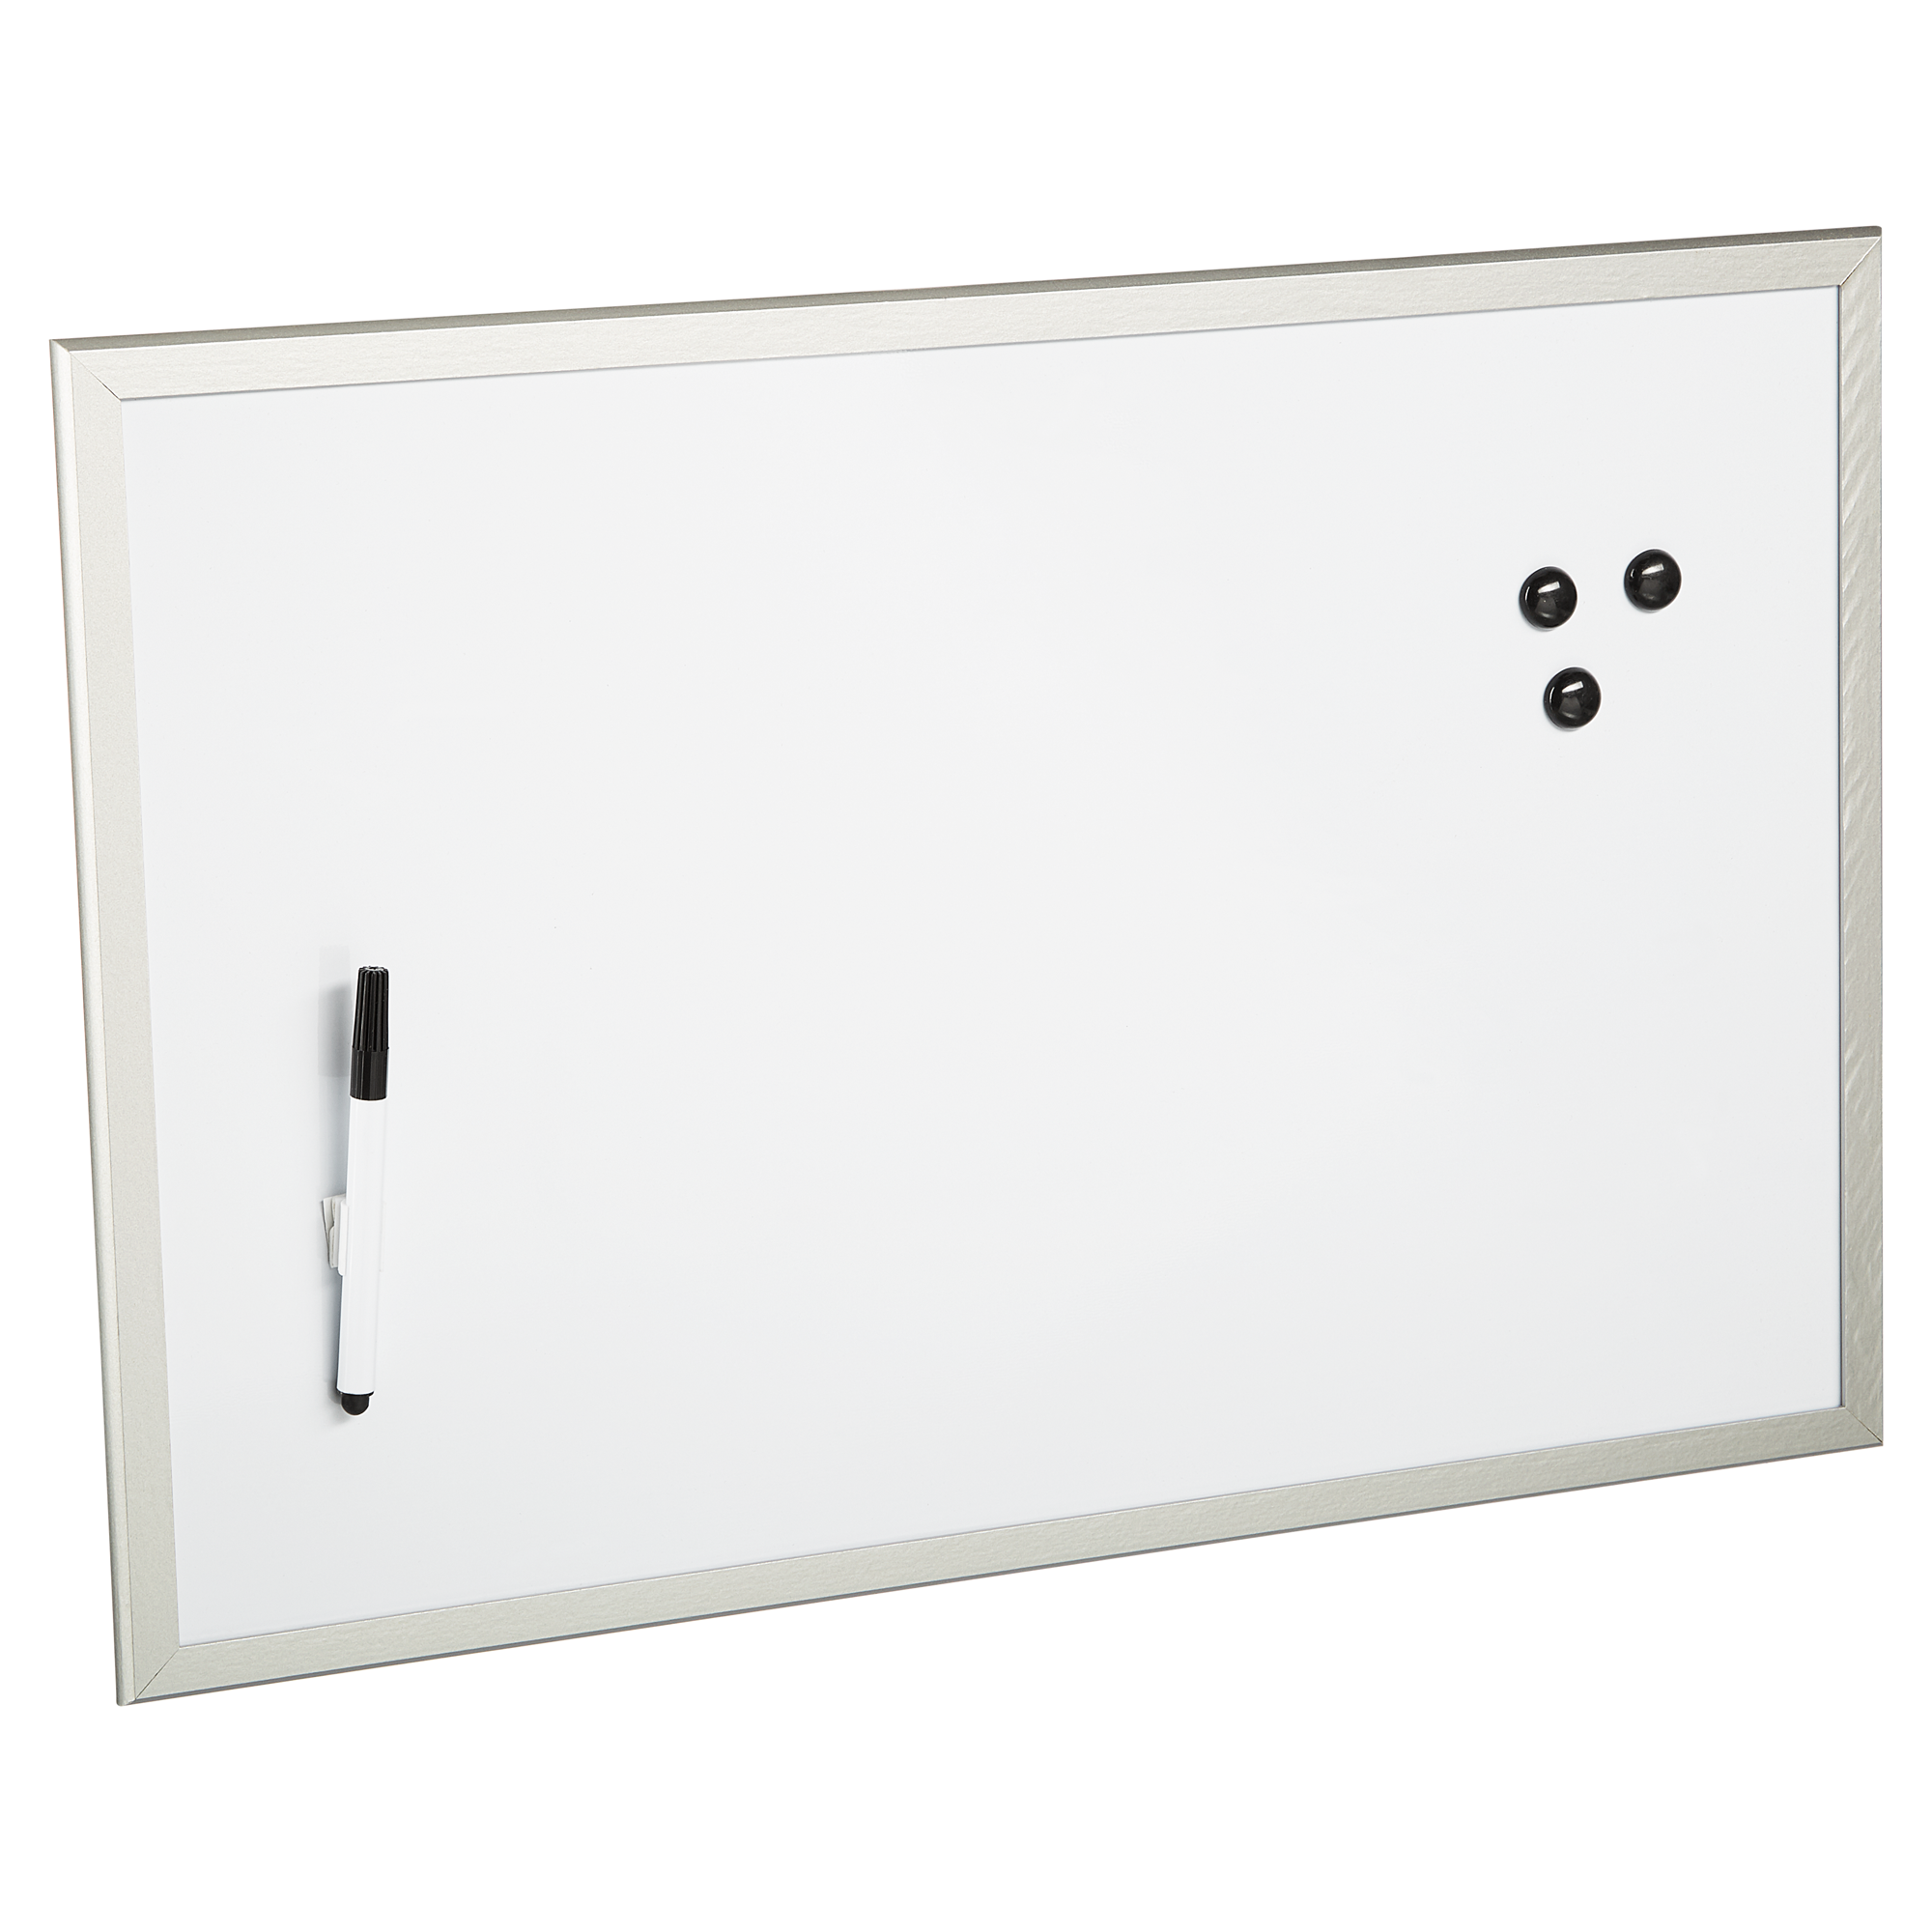 MDF-Magnet-Tafel, beschreibbar, 60 x 40 cm, weiß/aluminiumfarben + product picture